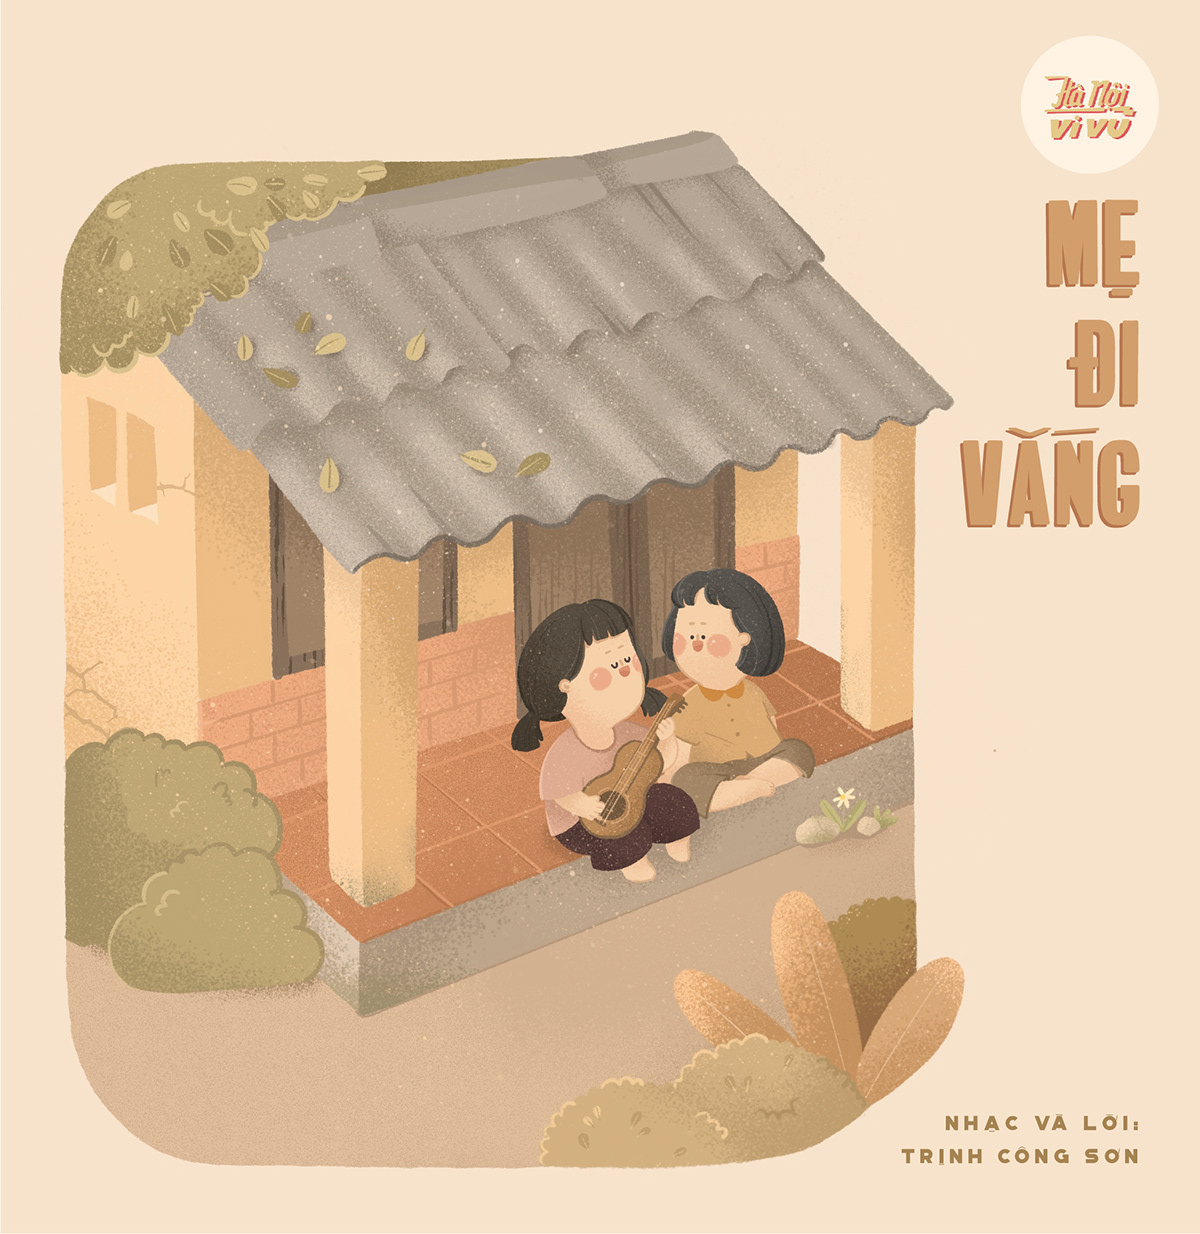 vietnam vietnamese song childhood children ILLUSTRATION  hanoi hanoivivu